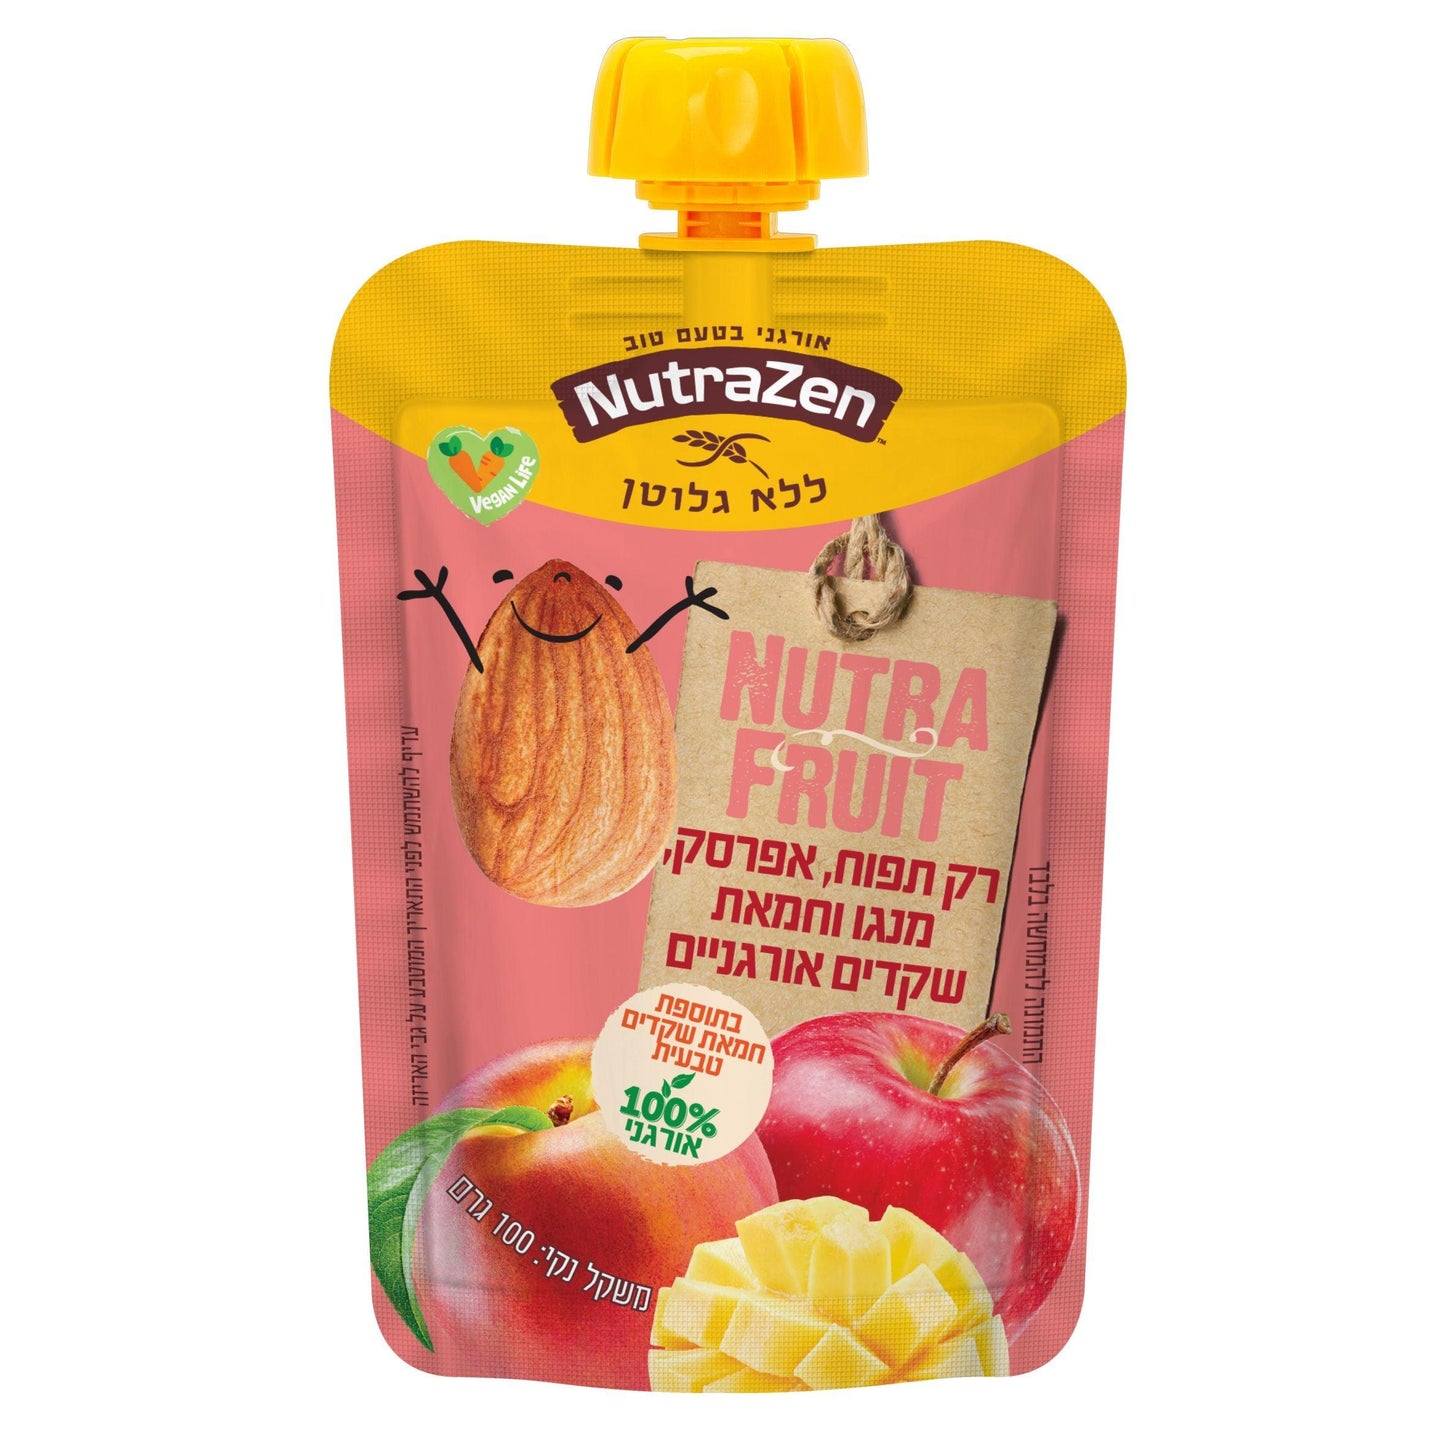 Nutra Fruit - מחית אורגנית תפוחי עץ, אפרסק, מנגו וחמאת שקדים | נוטרה זן - NutraZen - פריקפוא